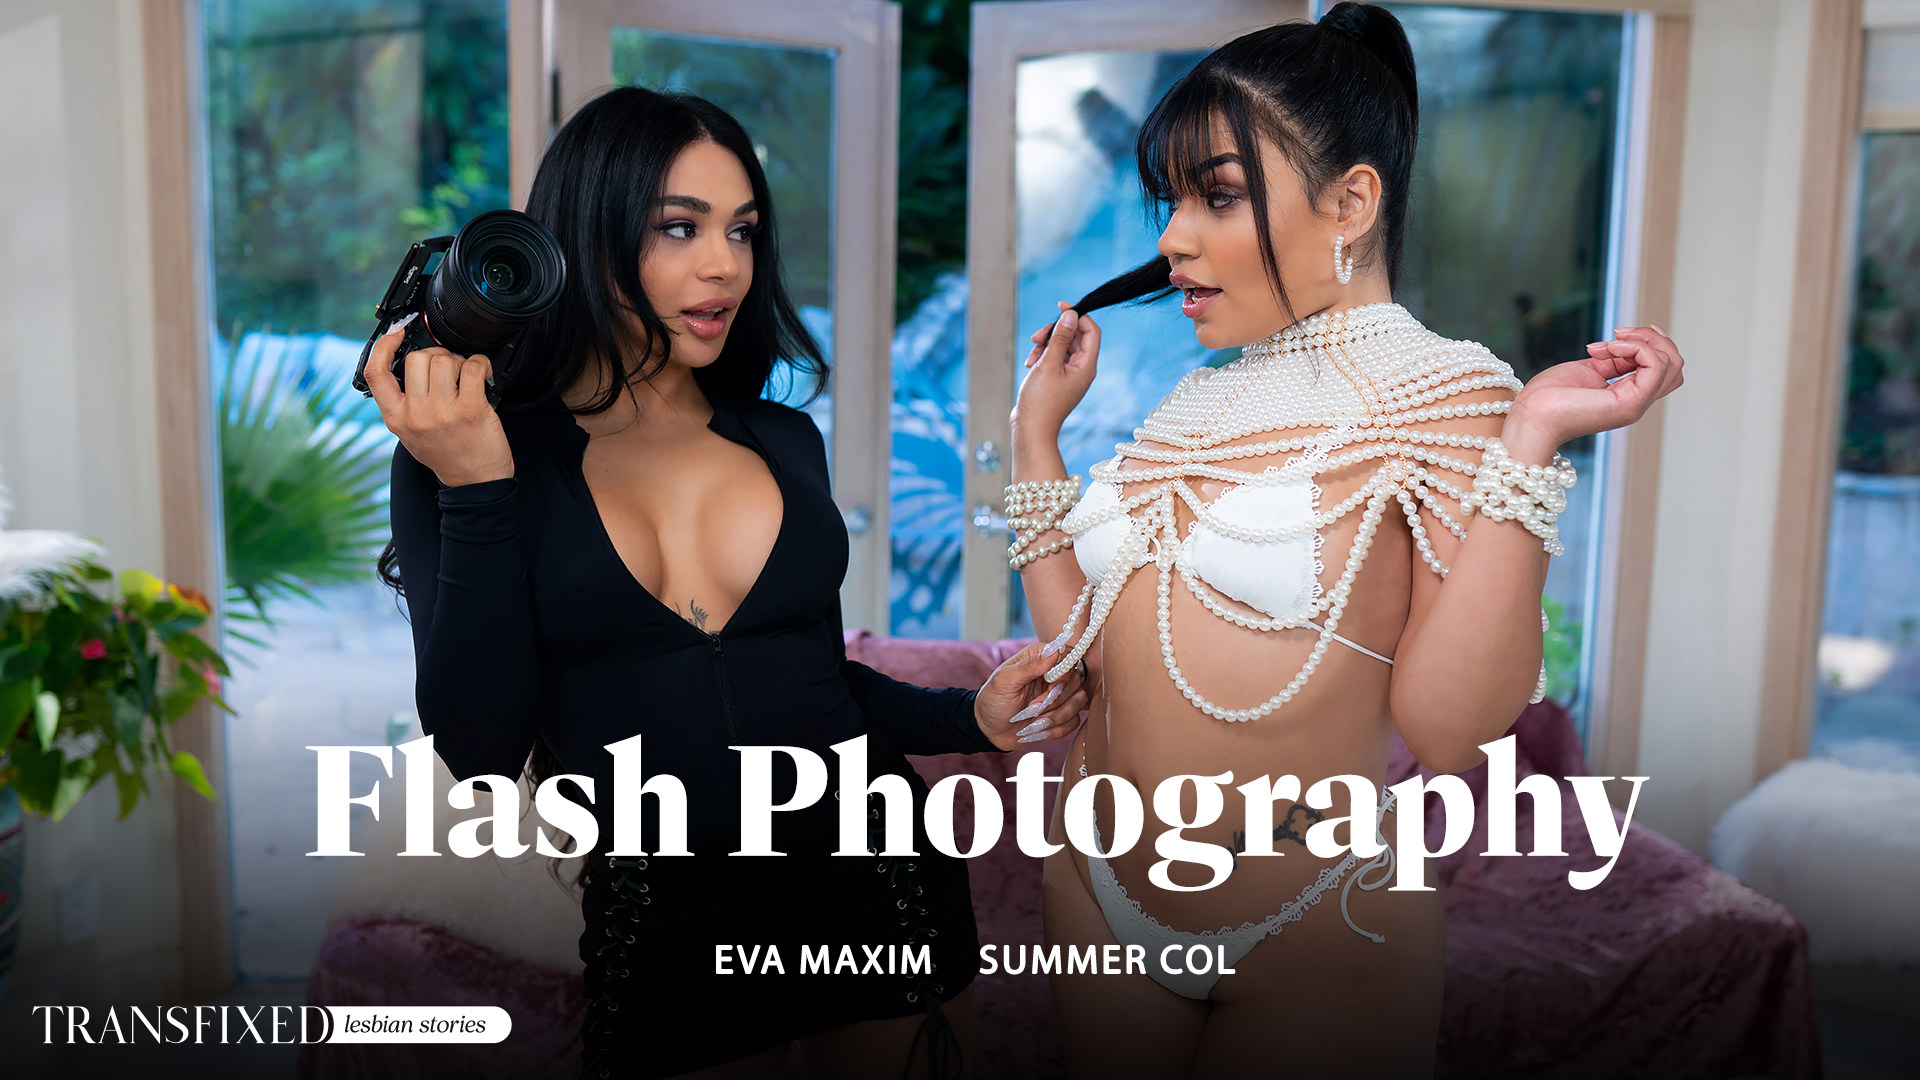 Transfixed Eva Maxim, Summer Col Flash Photography